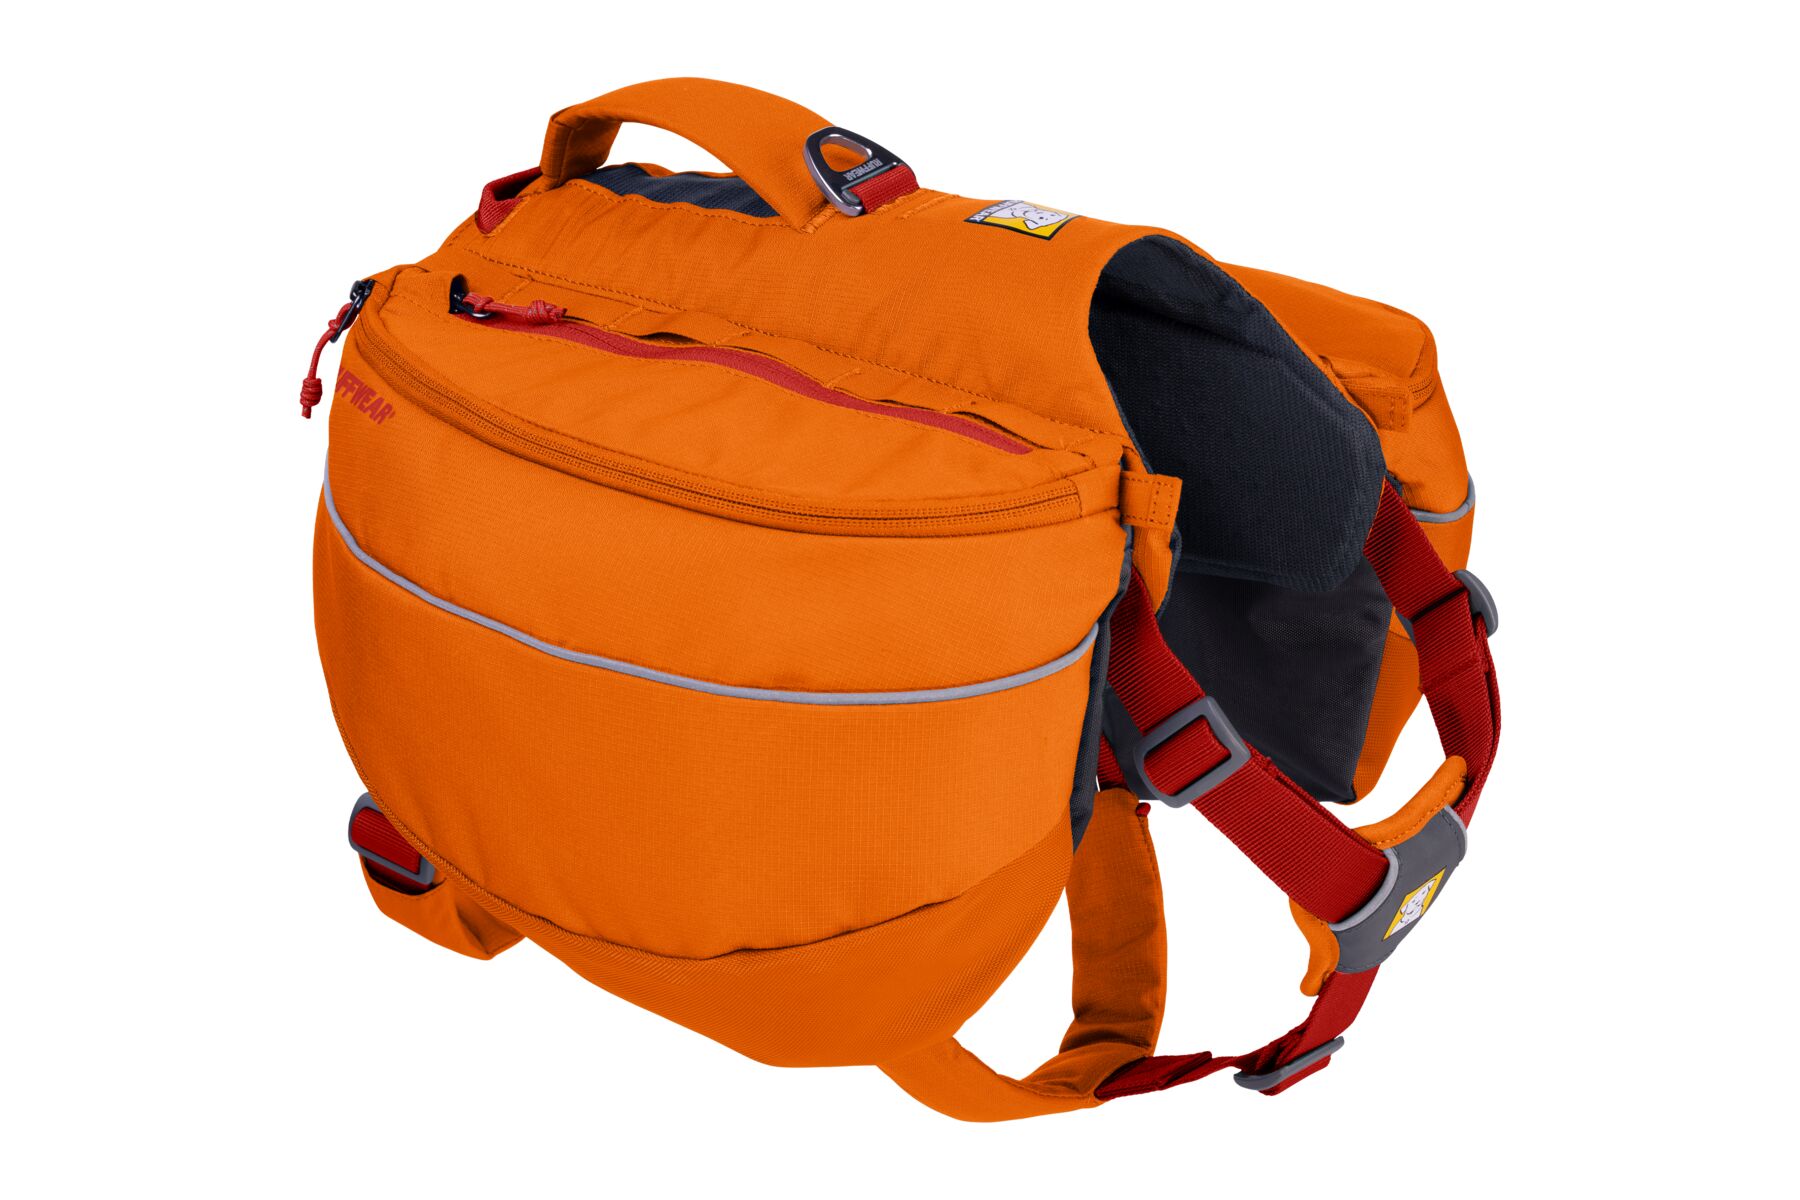 RuffWear Approach™ Pack Campfire Orange